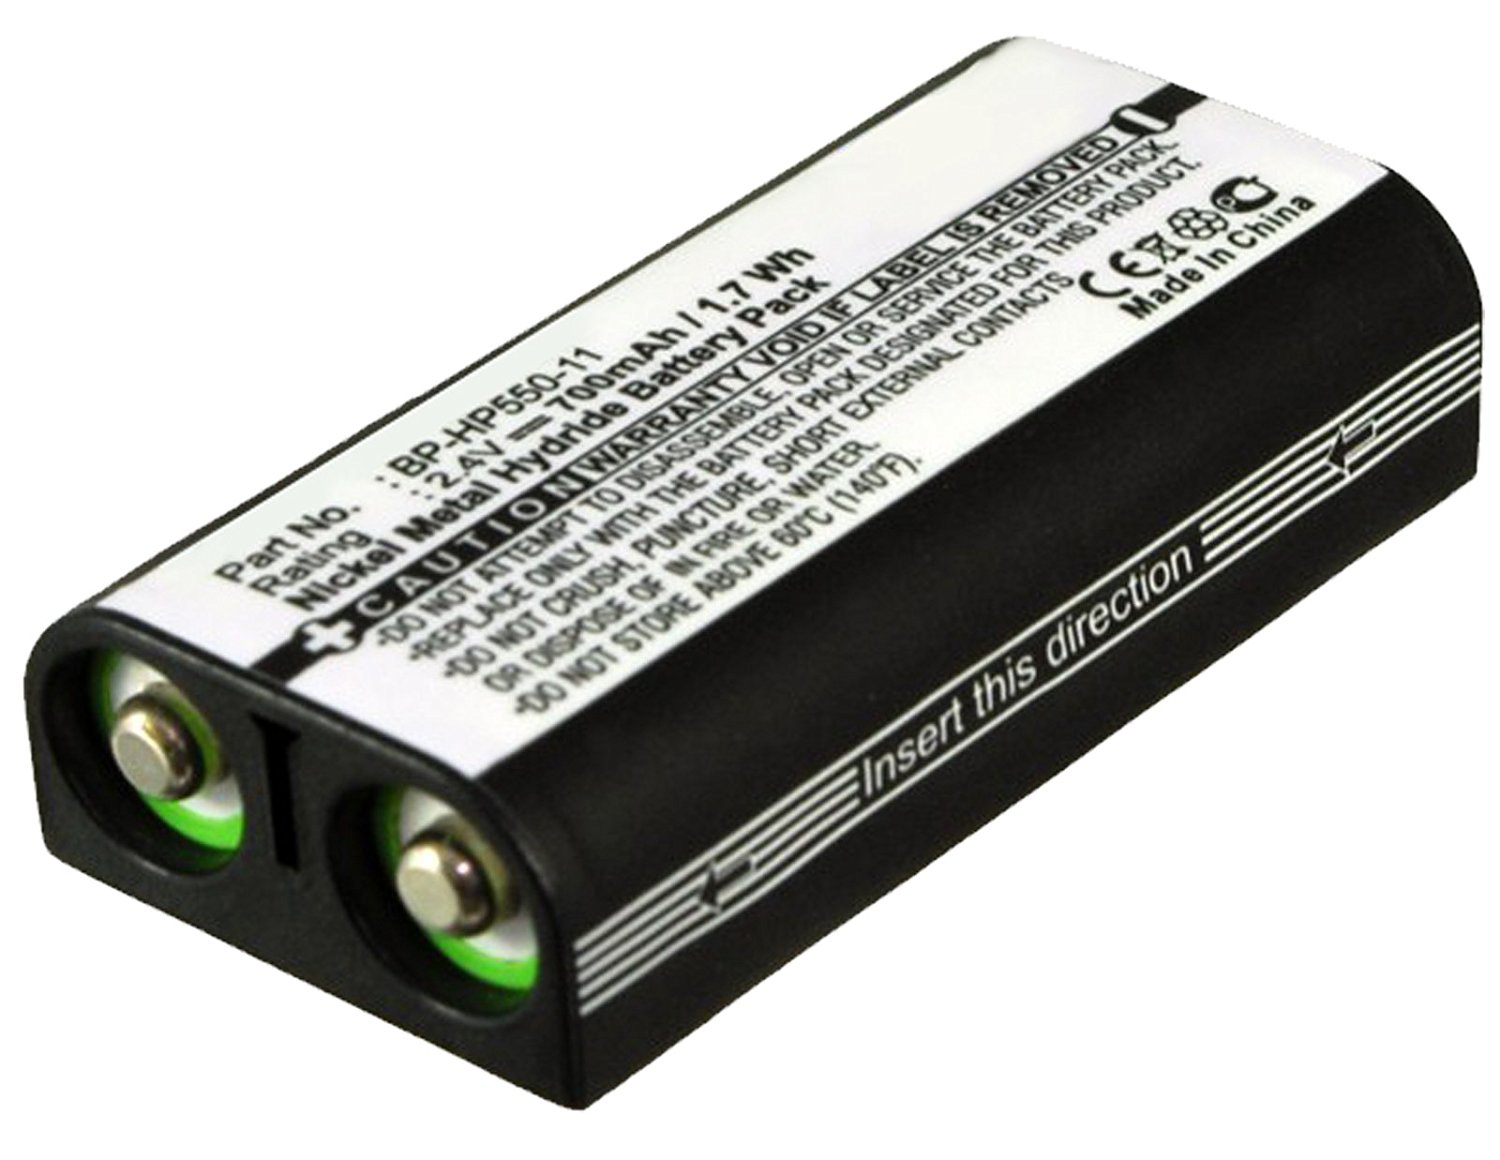 Sony BP-HP550 Battery Replacement - (Ni-MH, 1.2V, 700mAh) Ultra Hi-Capacity Battery